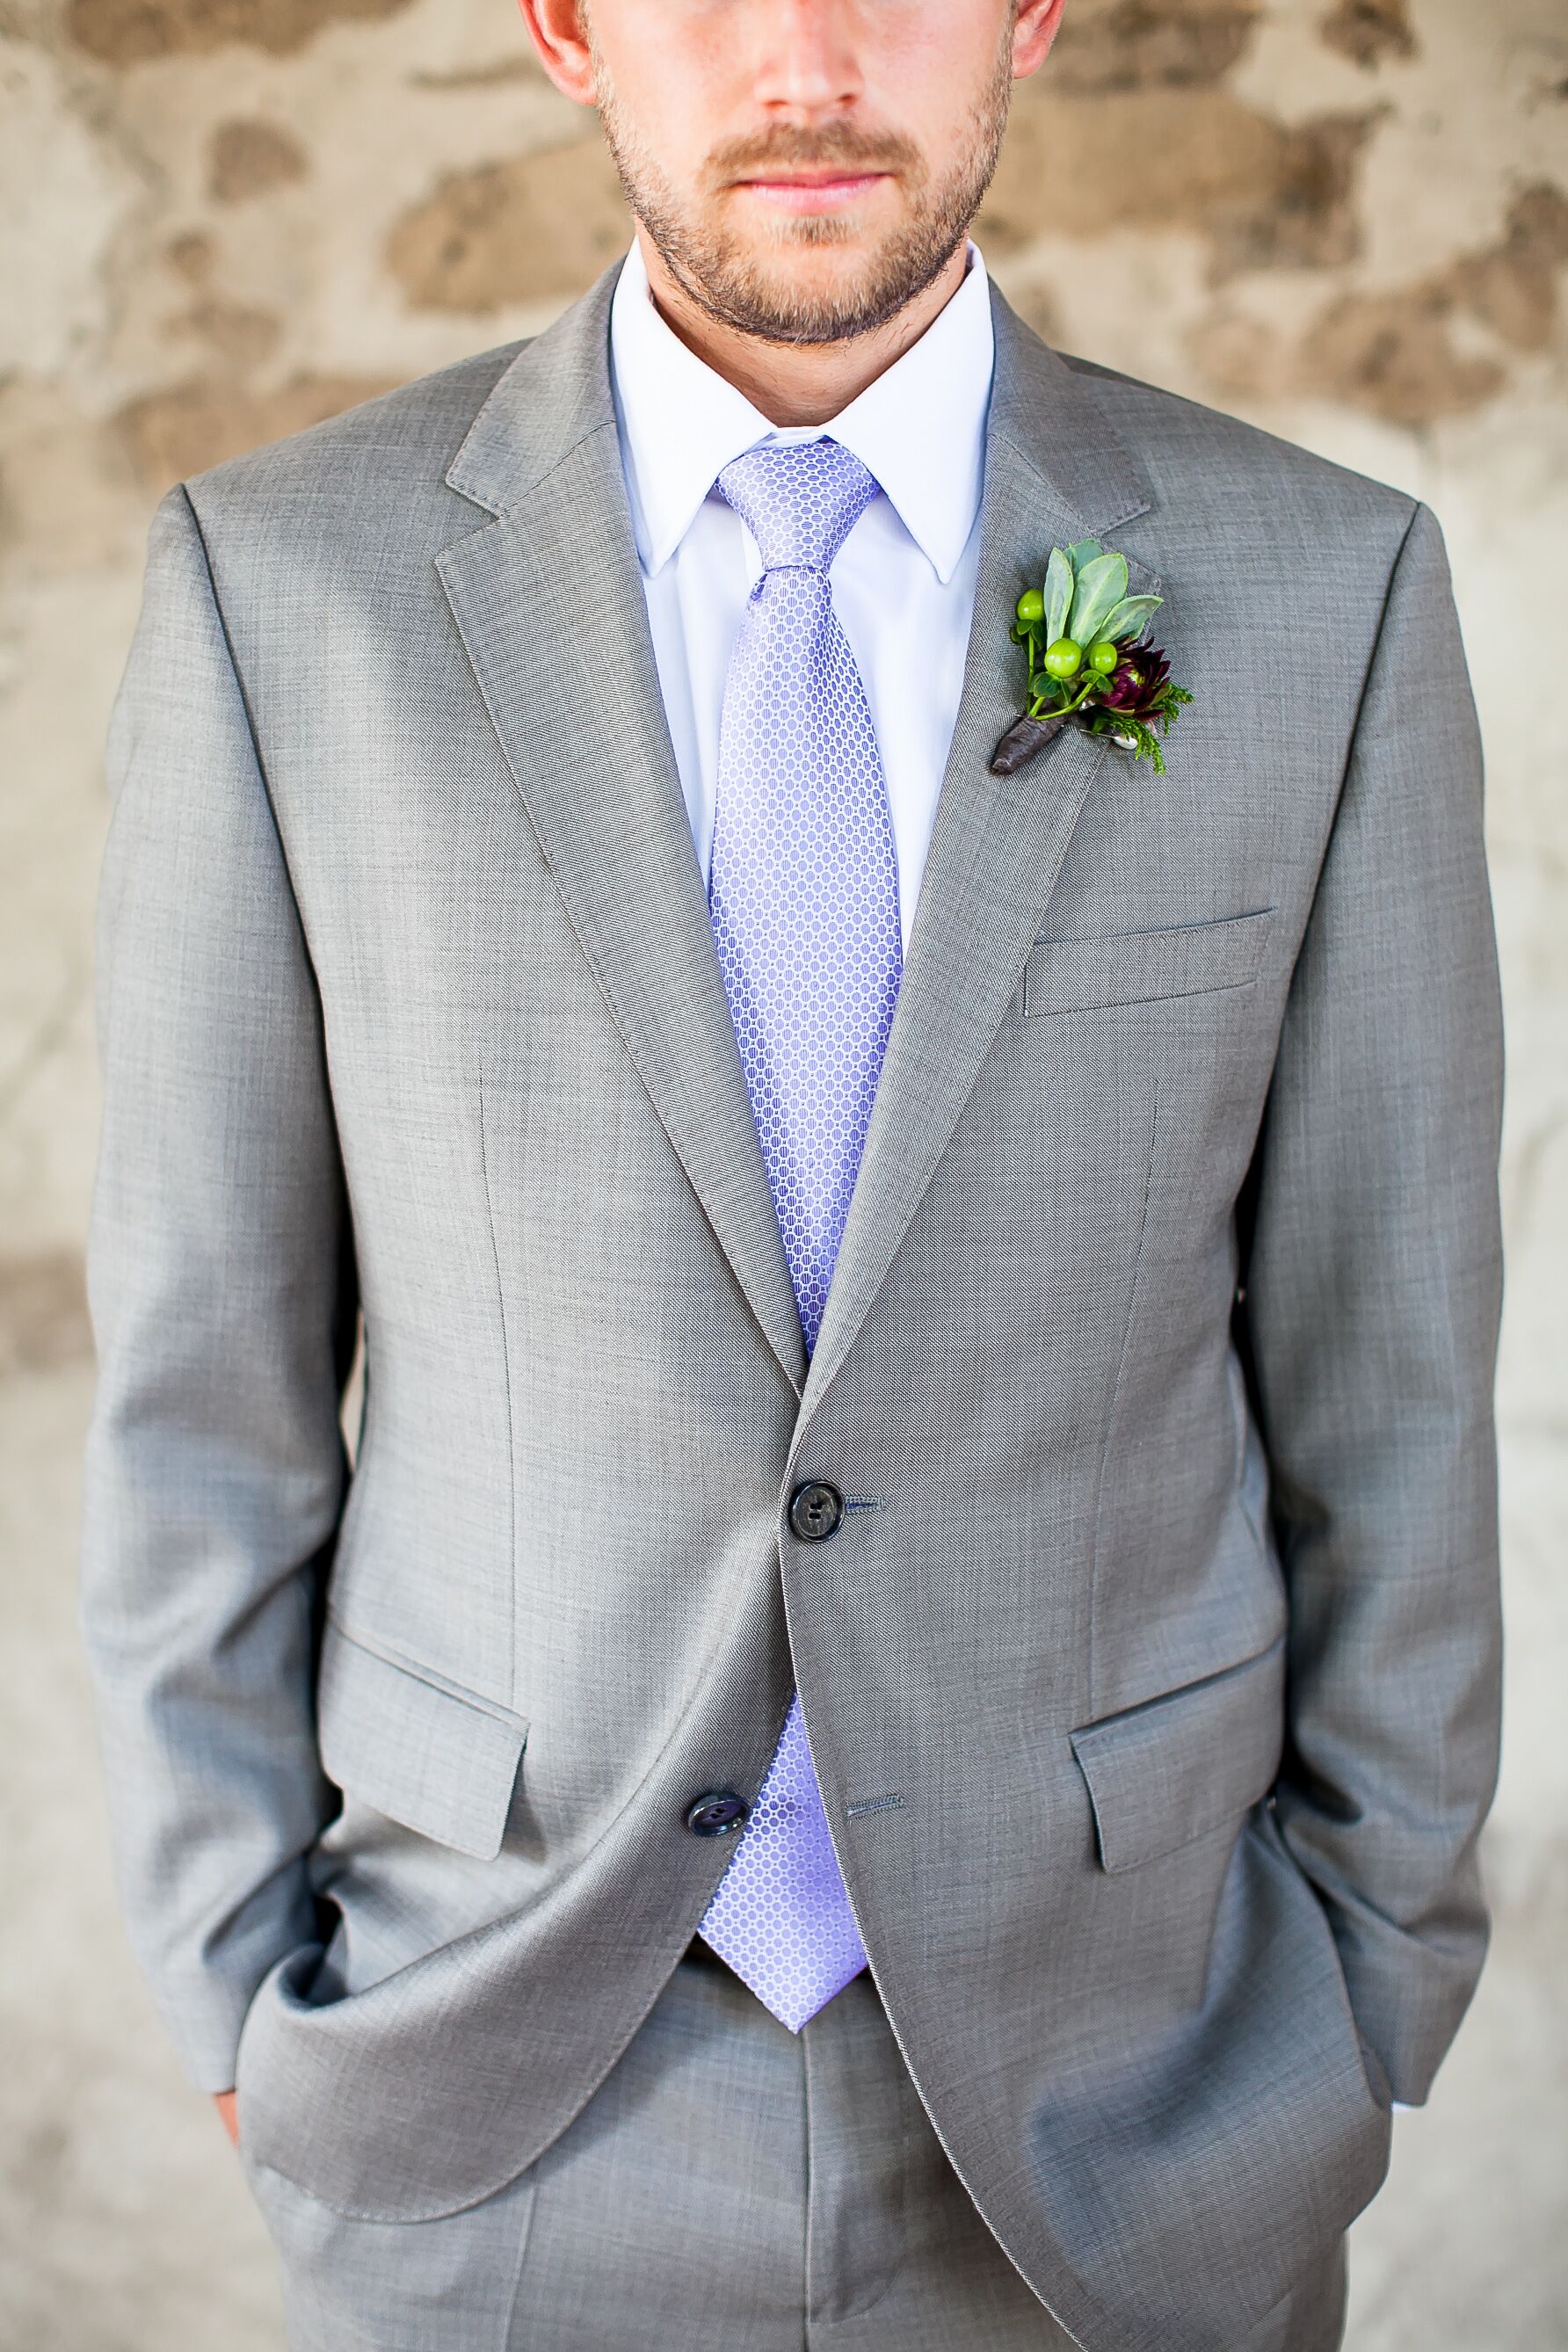 Blue Tie Grey Suit